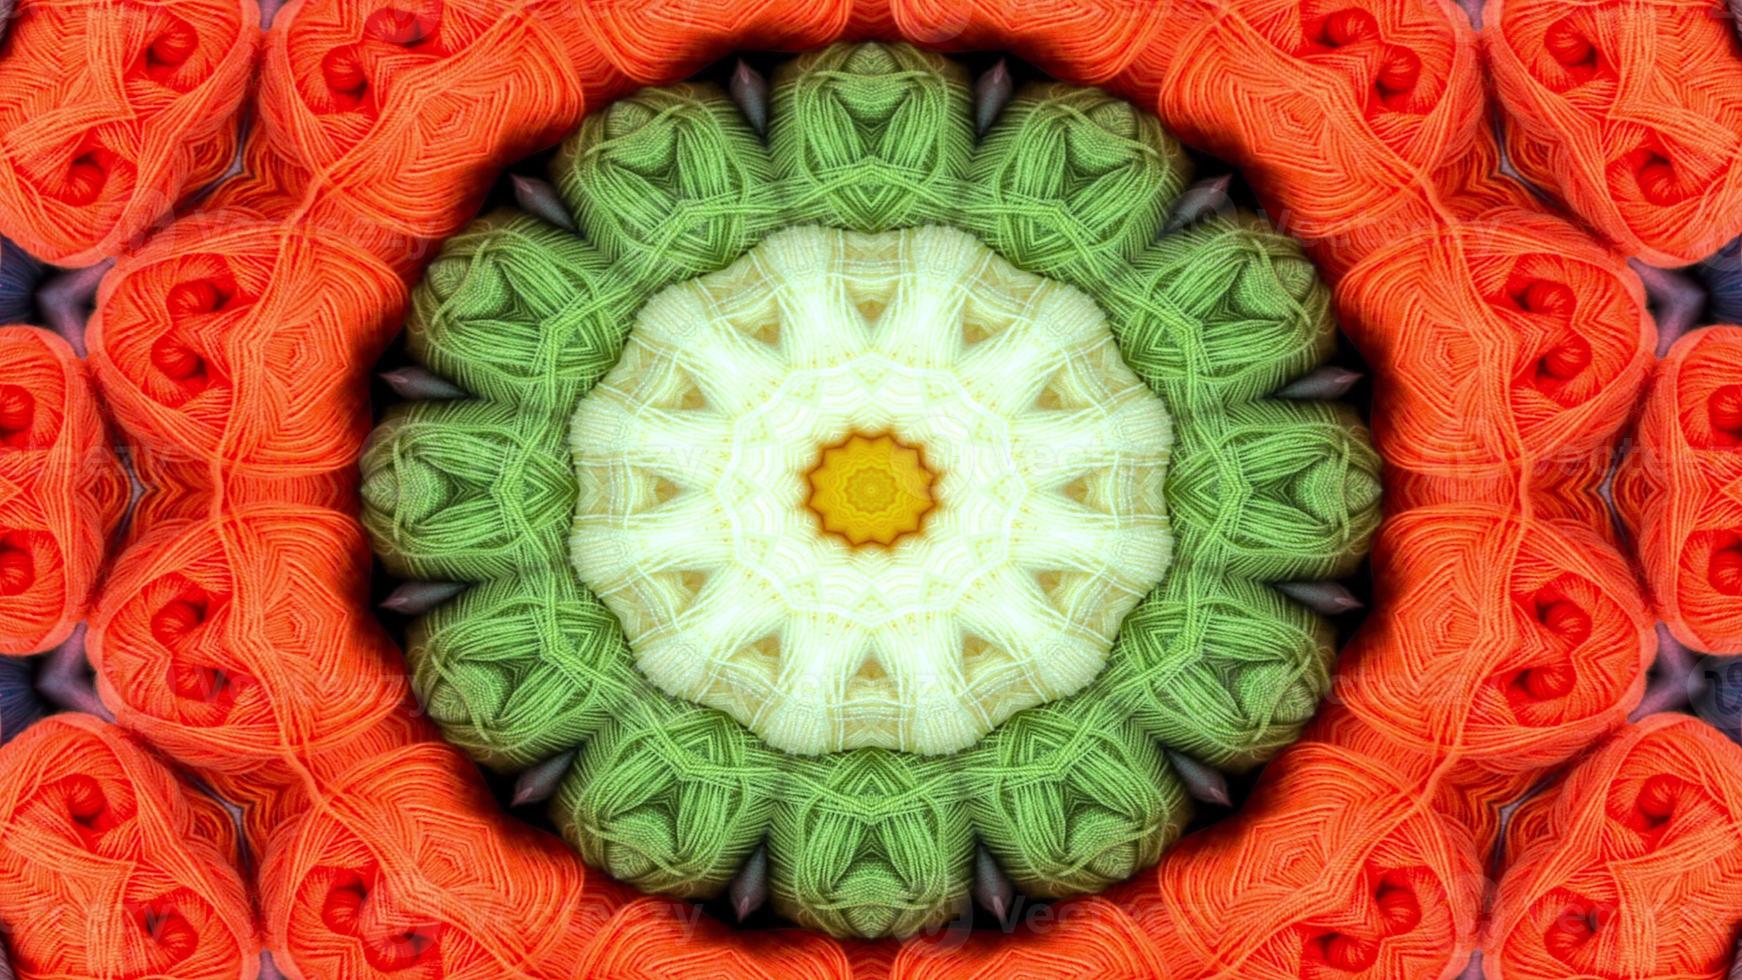 Abstract Colorful Symmetric Kaleidoscope photo